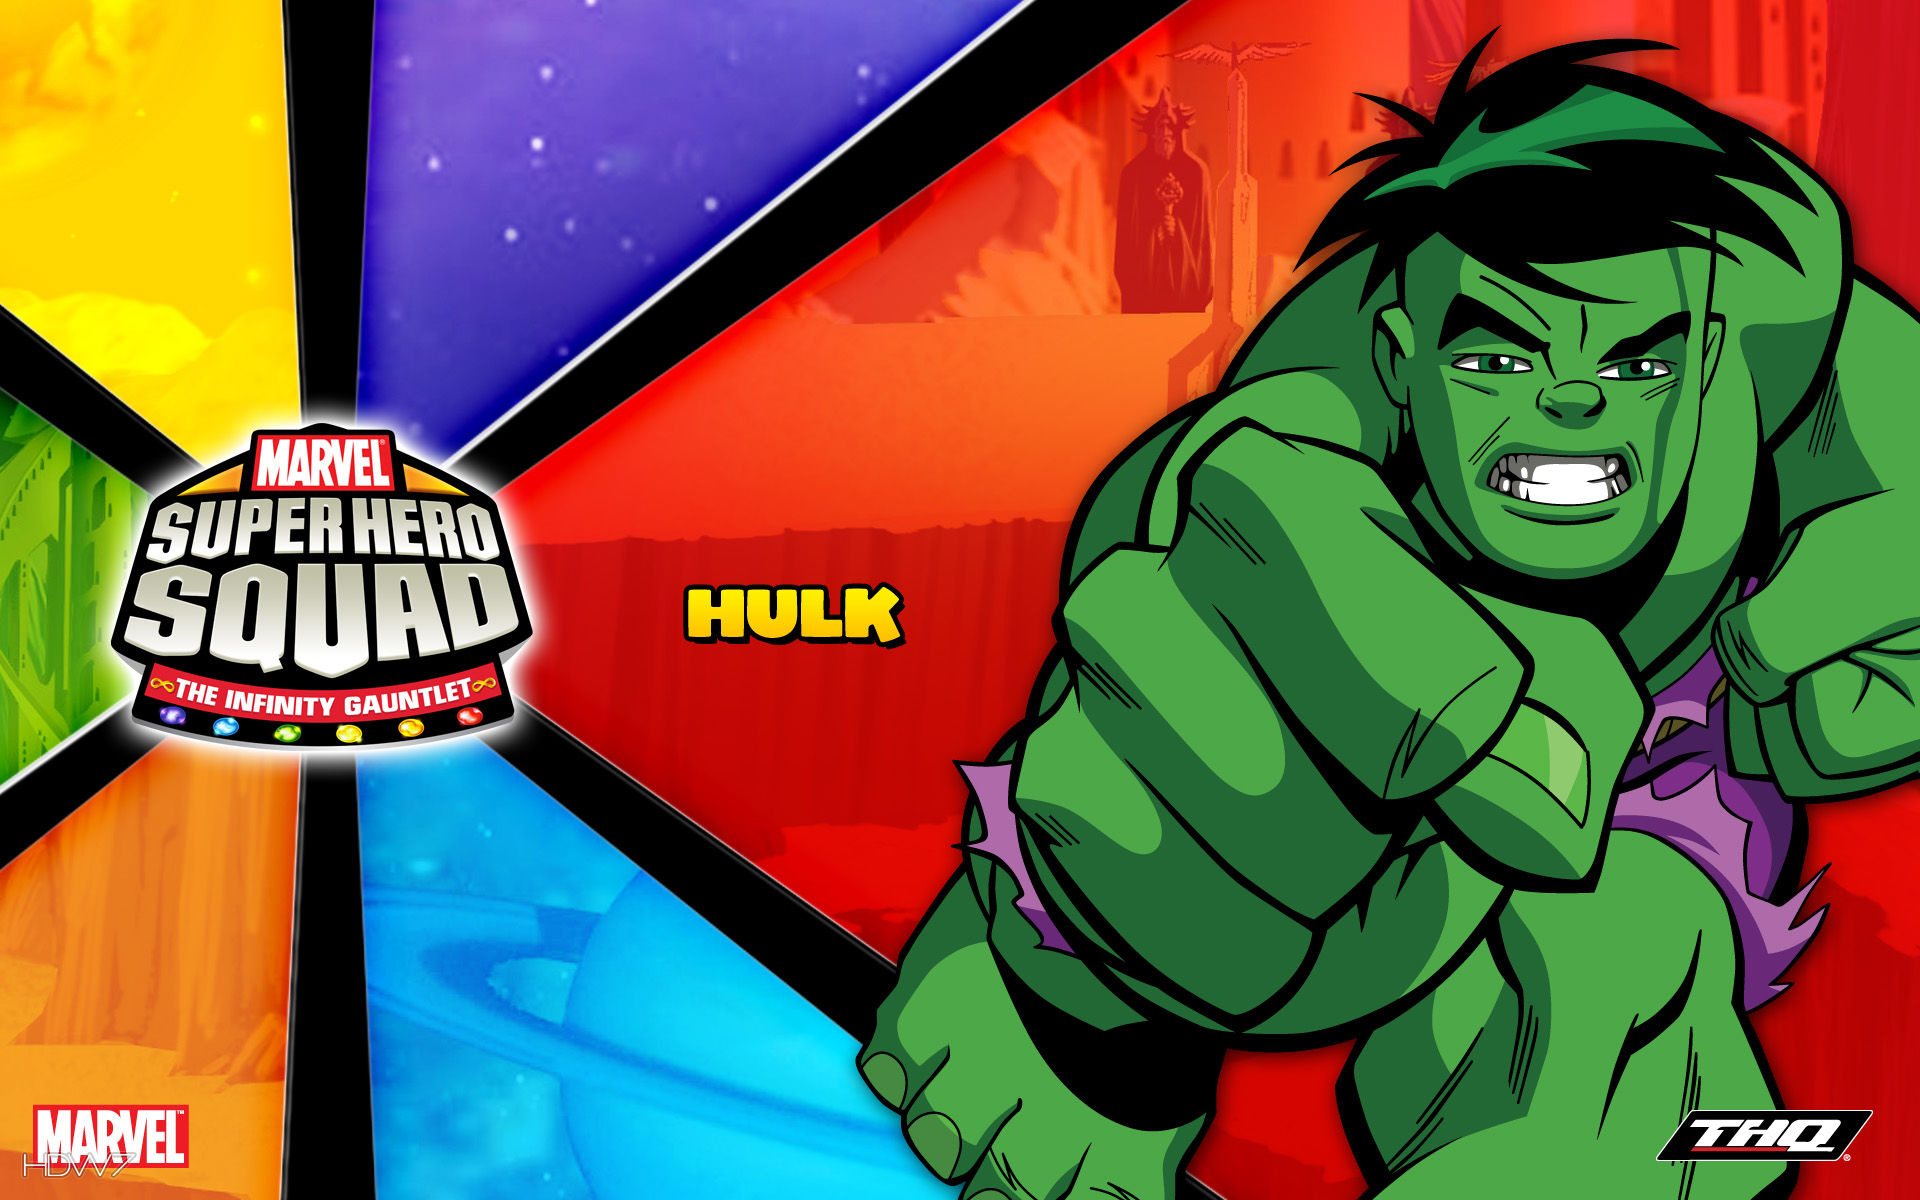 Marvel Super Hero Squad The Infinity Gauntlet Hulk